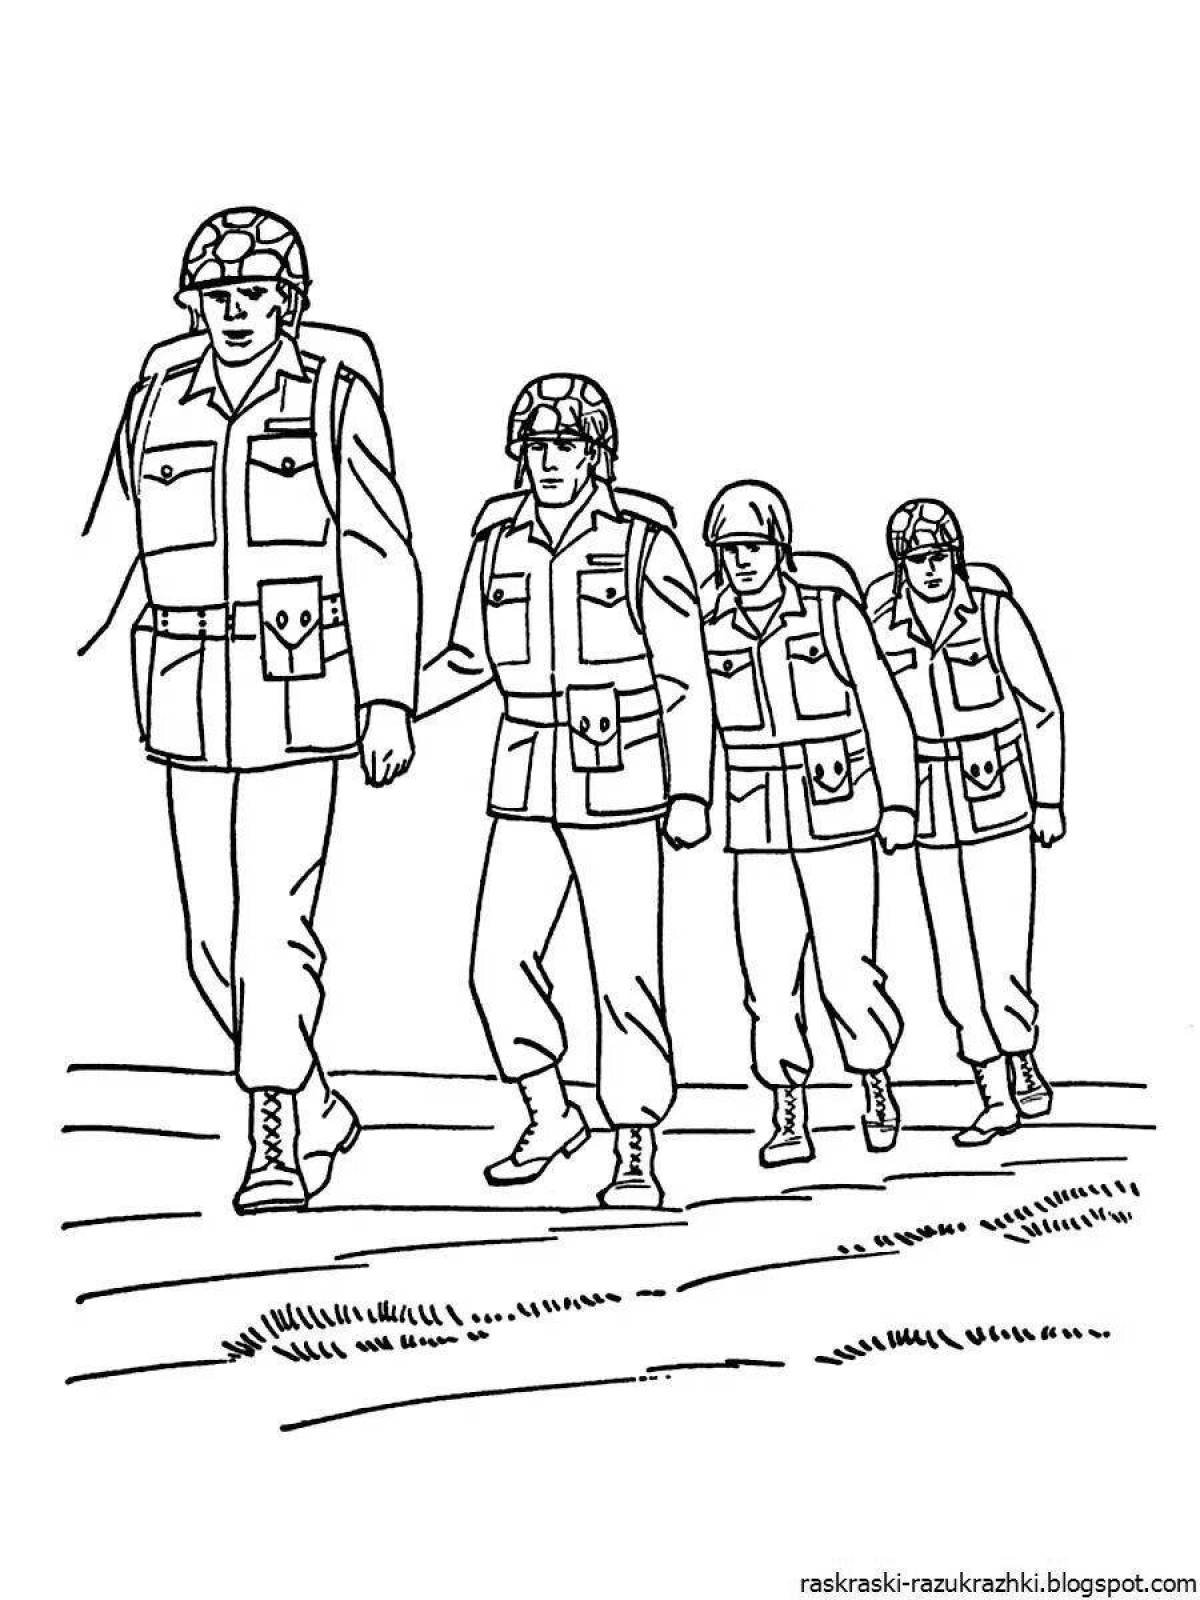 Coloring page elegant military uniform